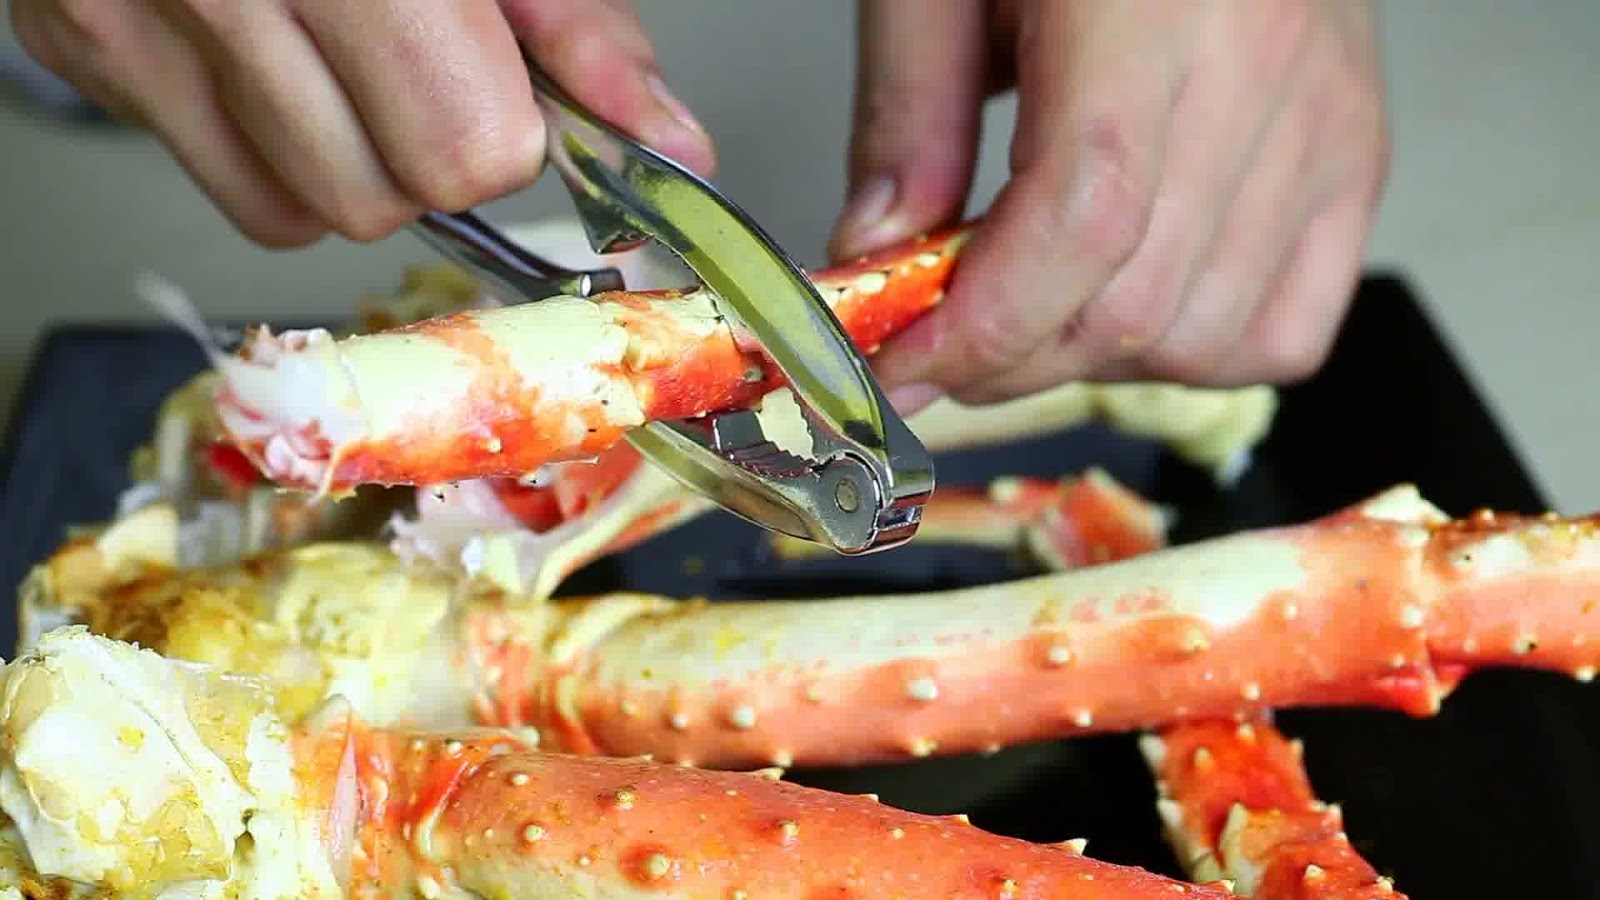 Bdsm lobster tube